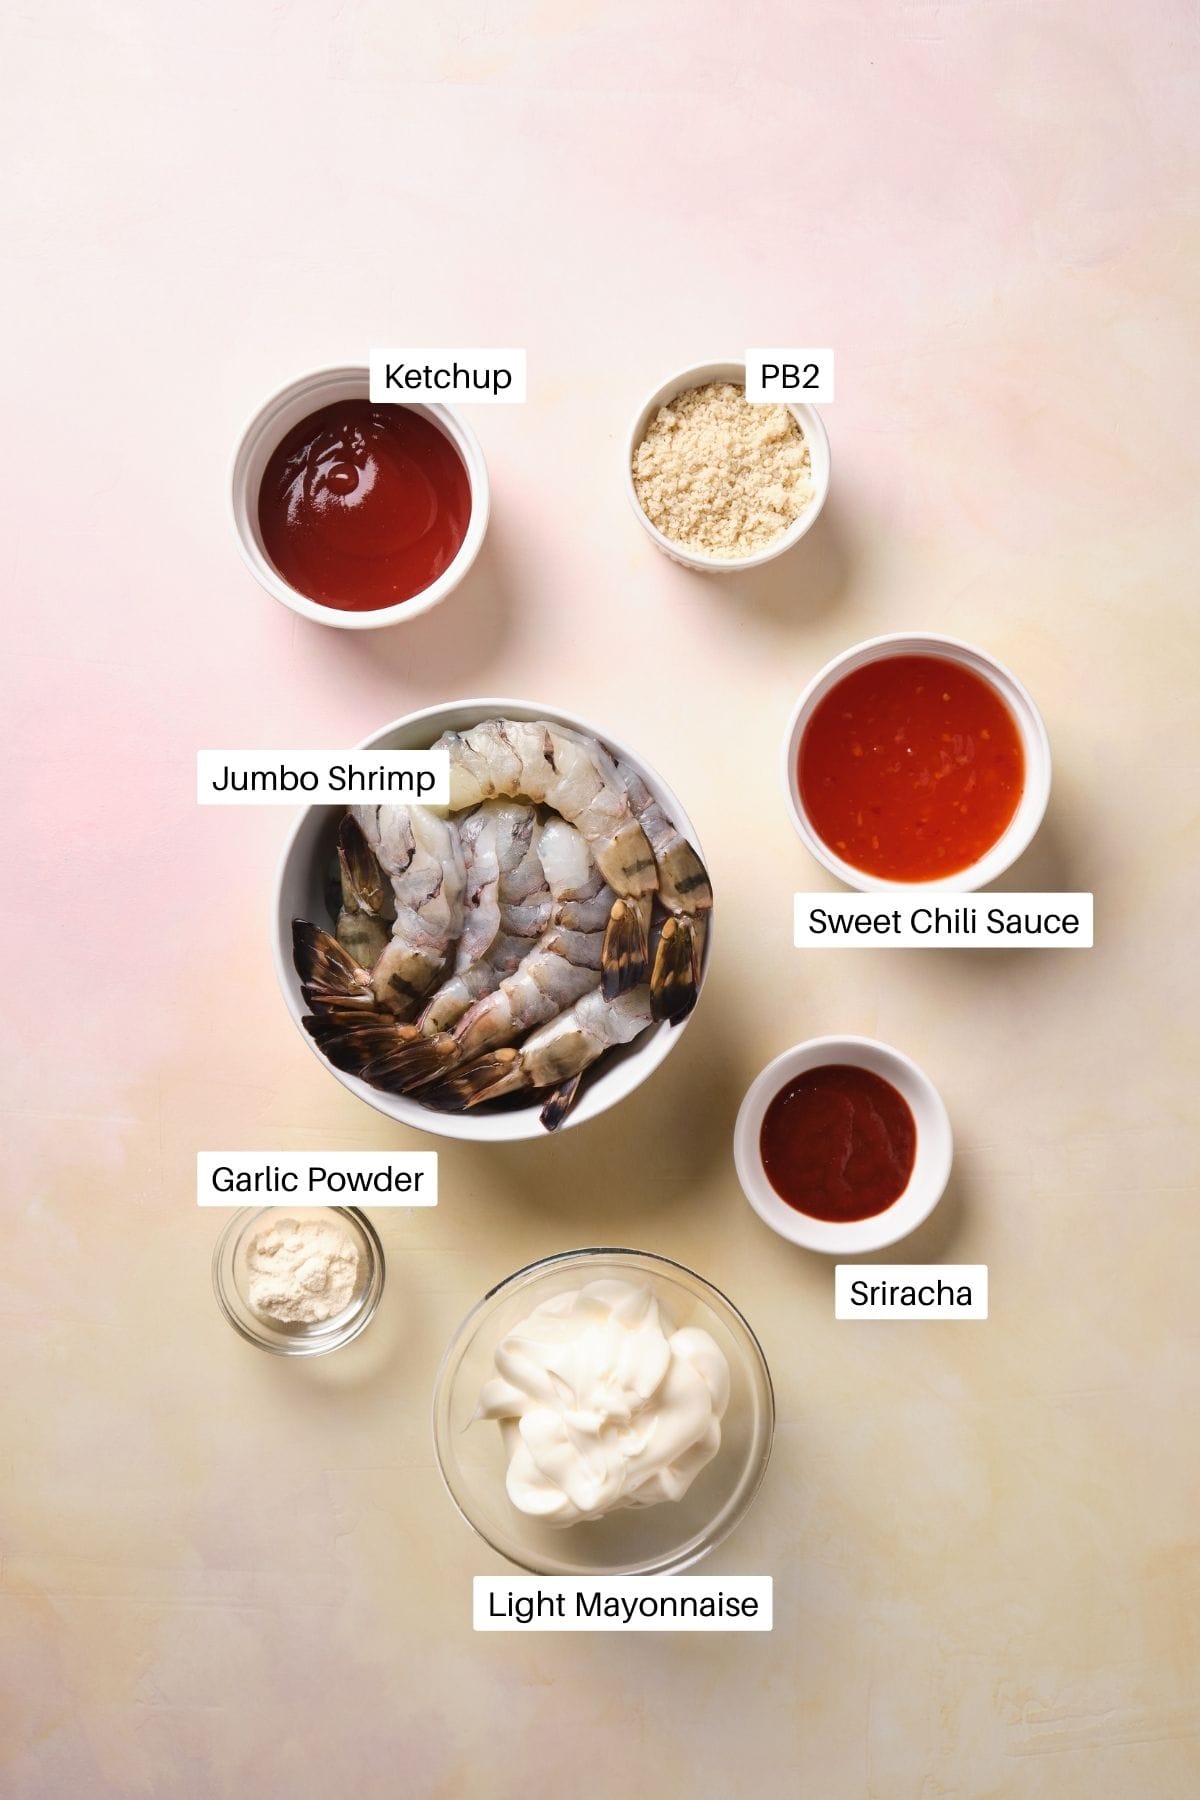 Boom boom shrimp ingredients including ketchup, sriracha, and PB2.